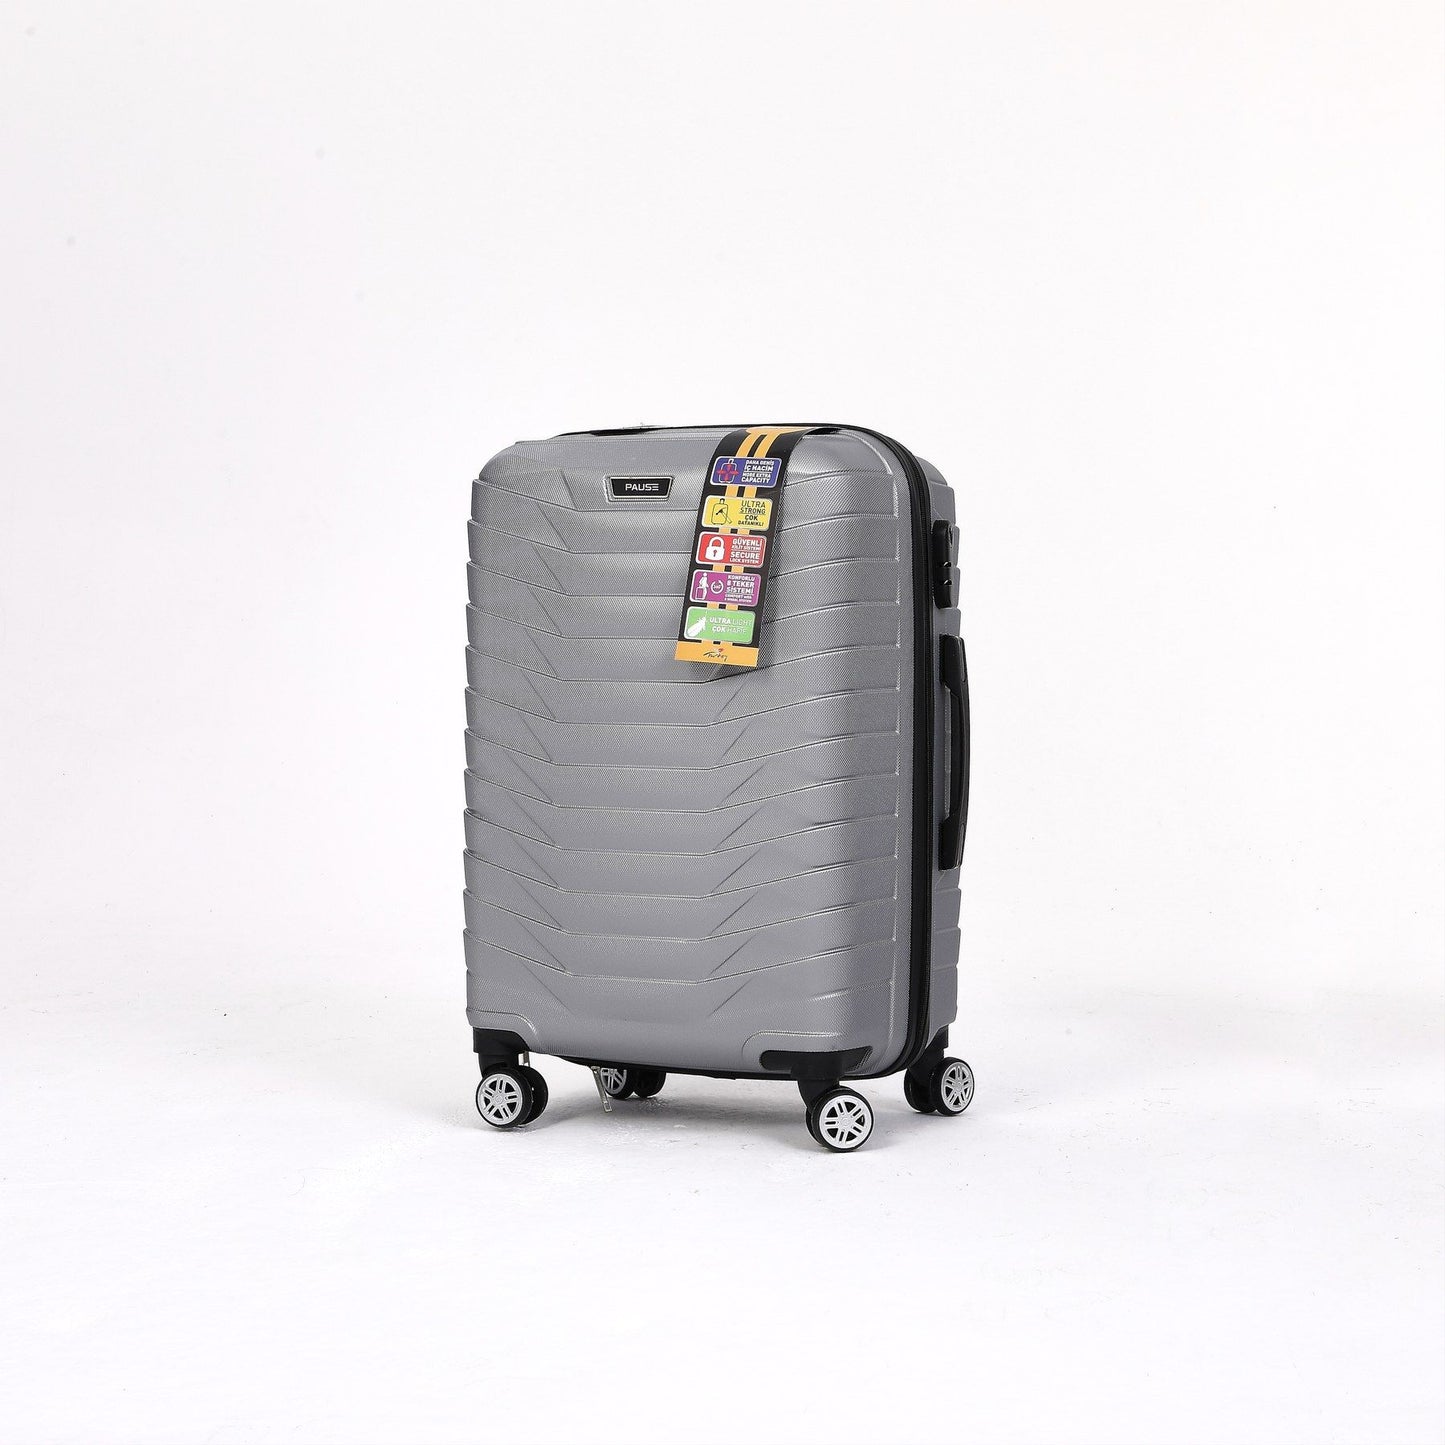 Valencia kuffert - Mellemstørrelse - Grå